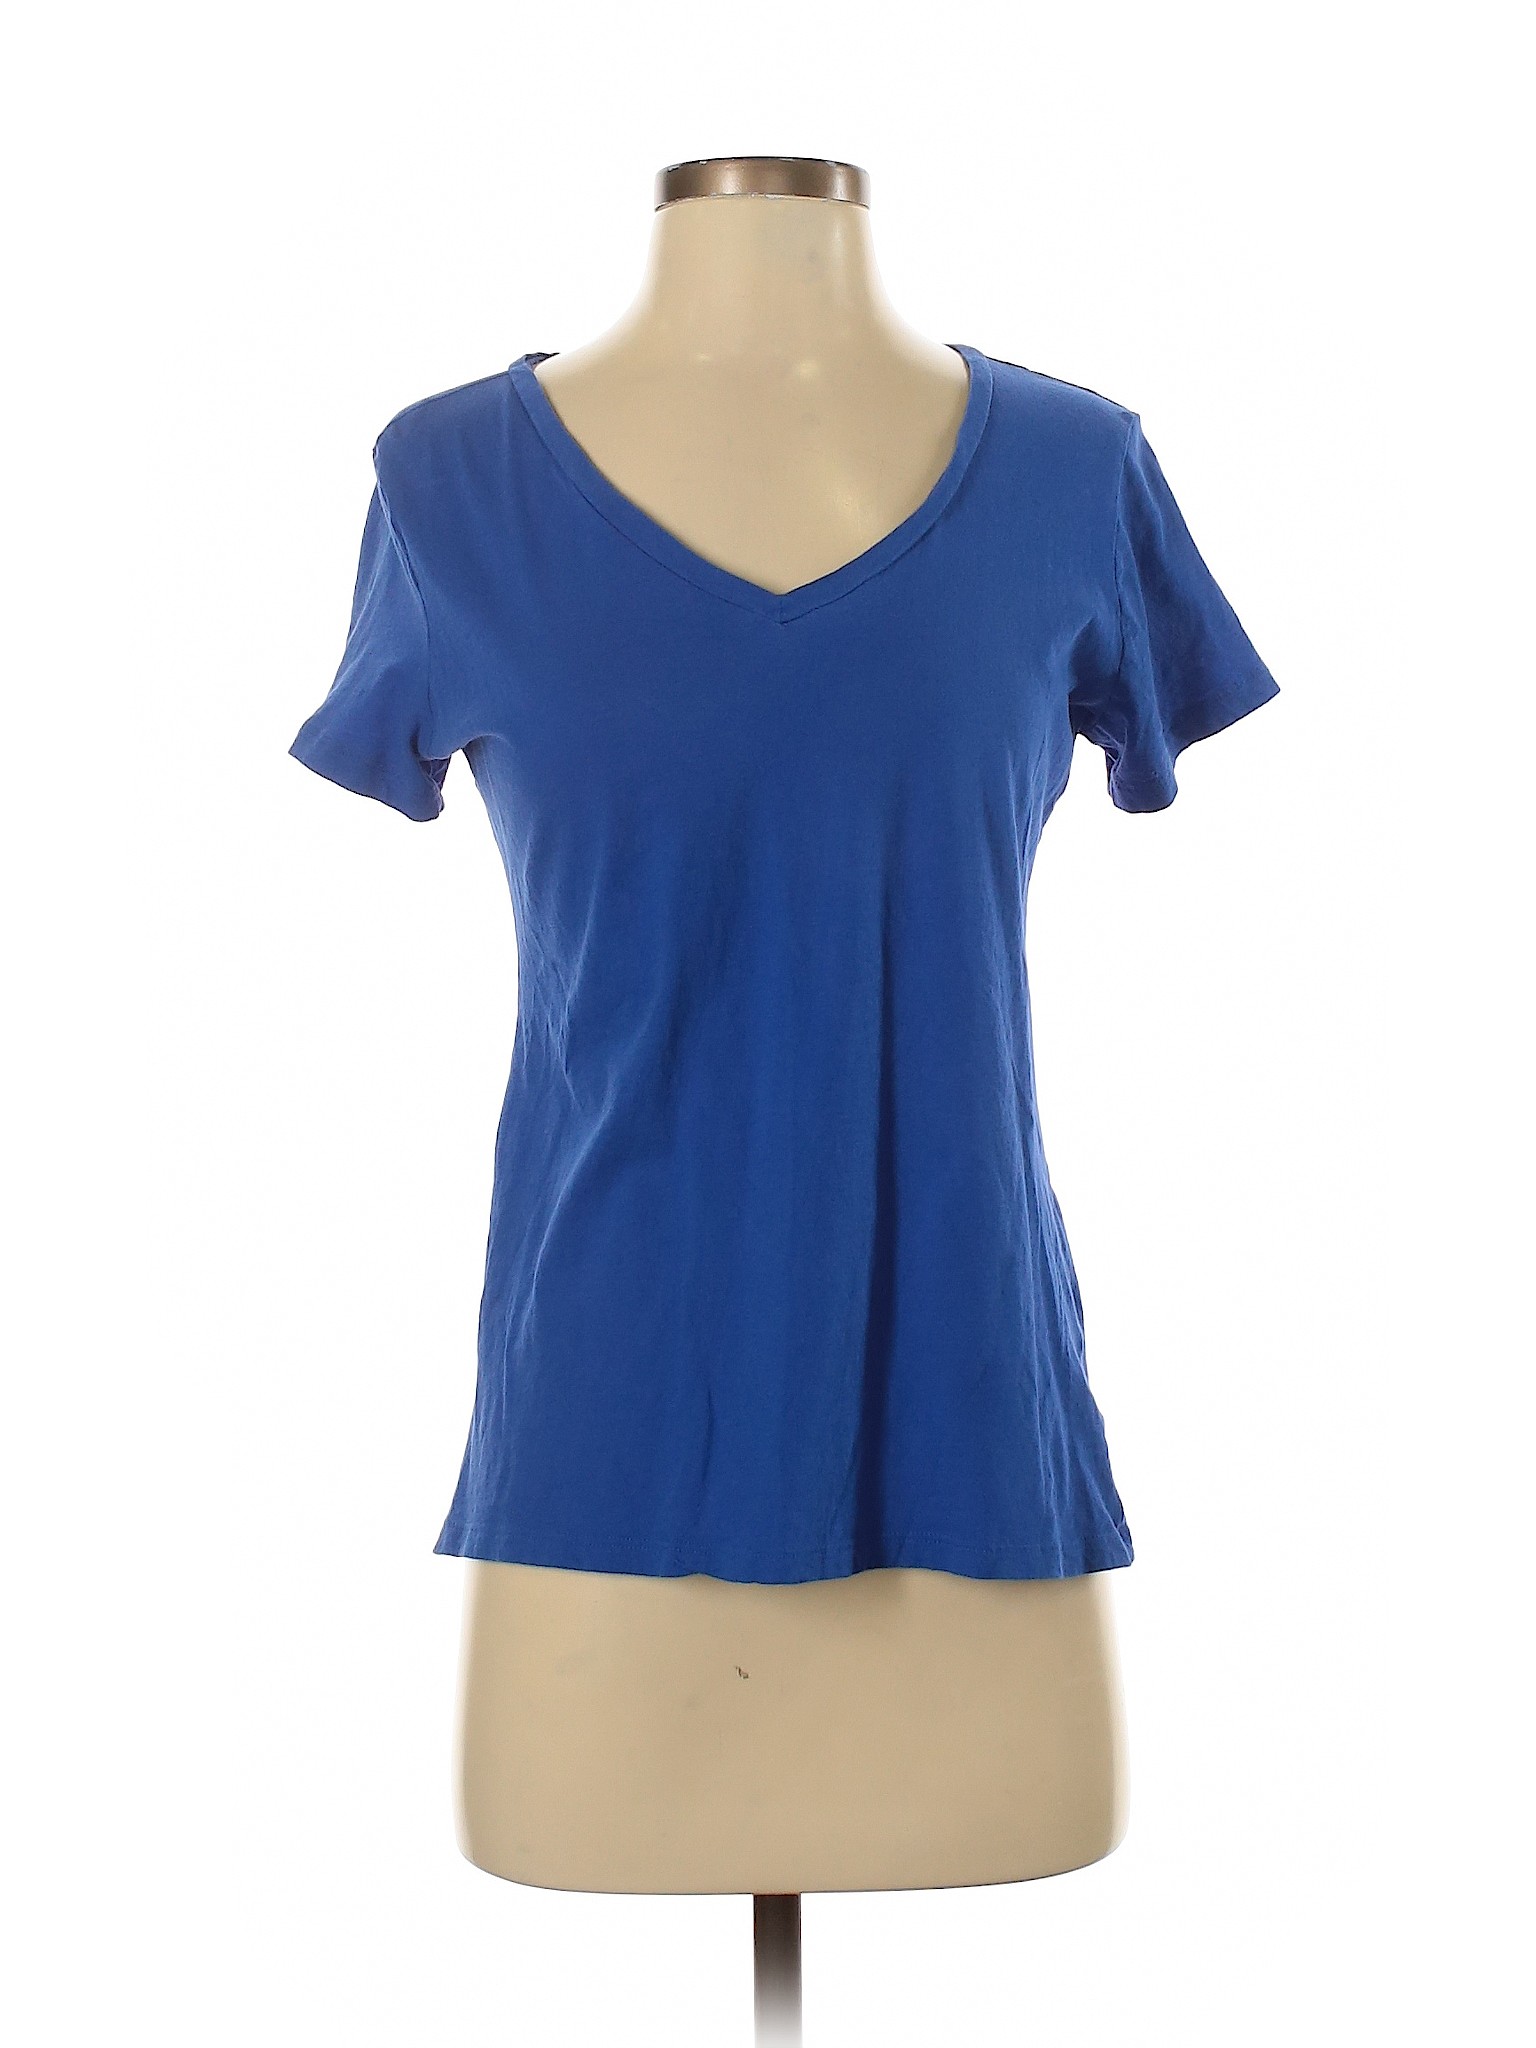 Old Navy Women Blue Short Sleeve T-Shirt XS | eBay